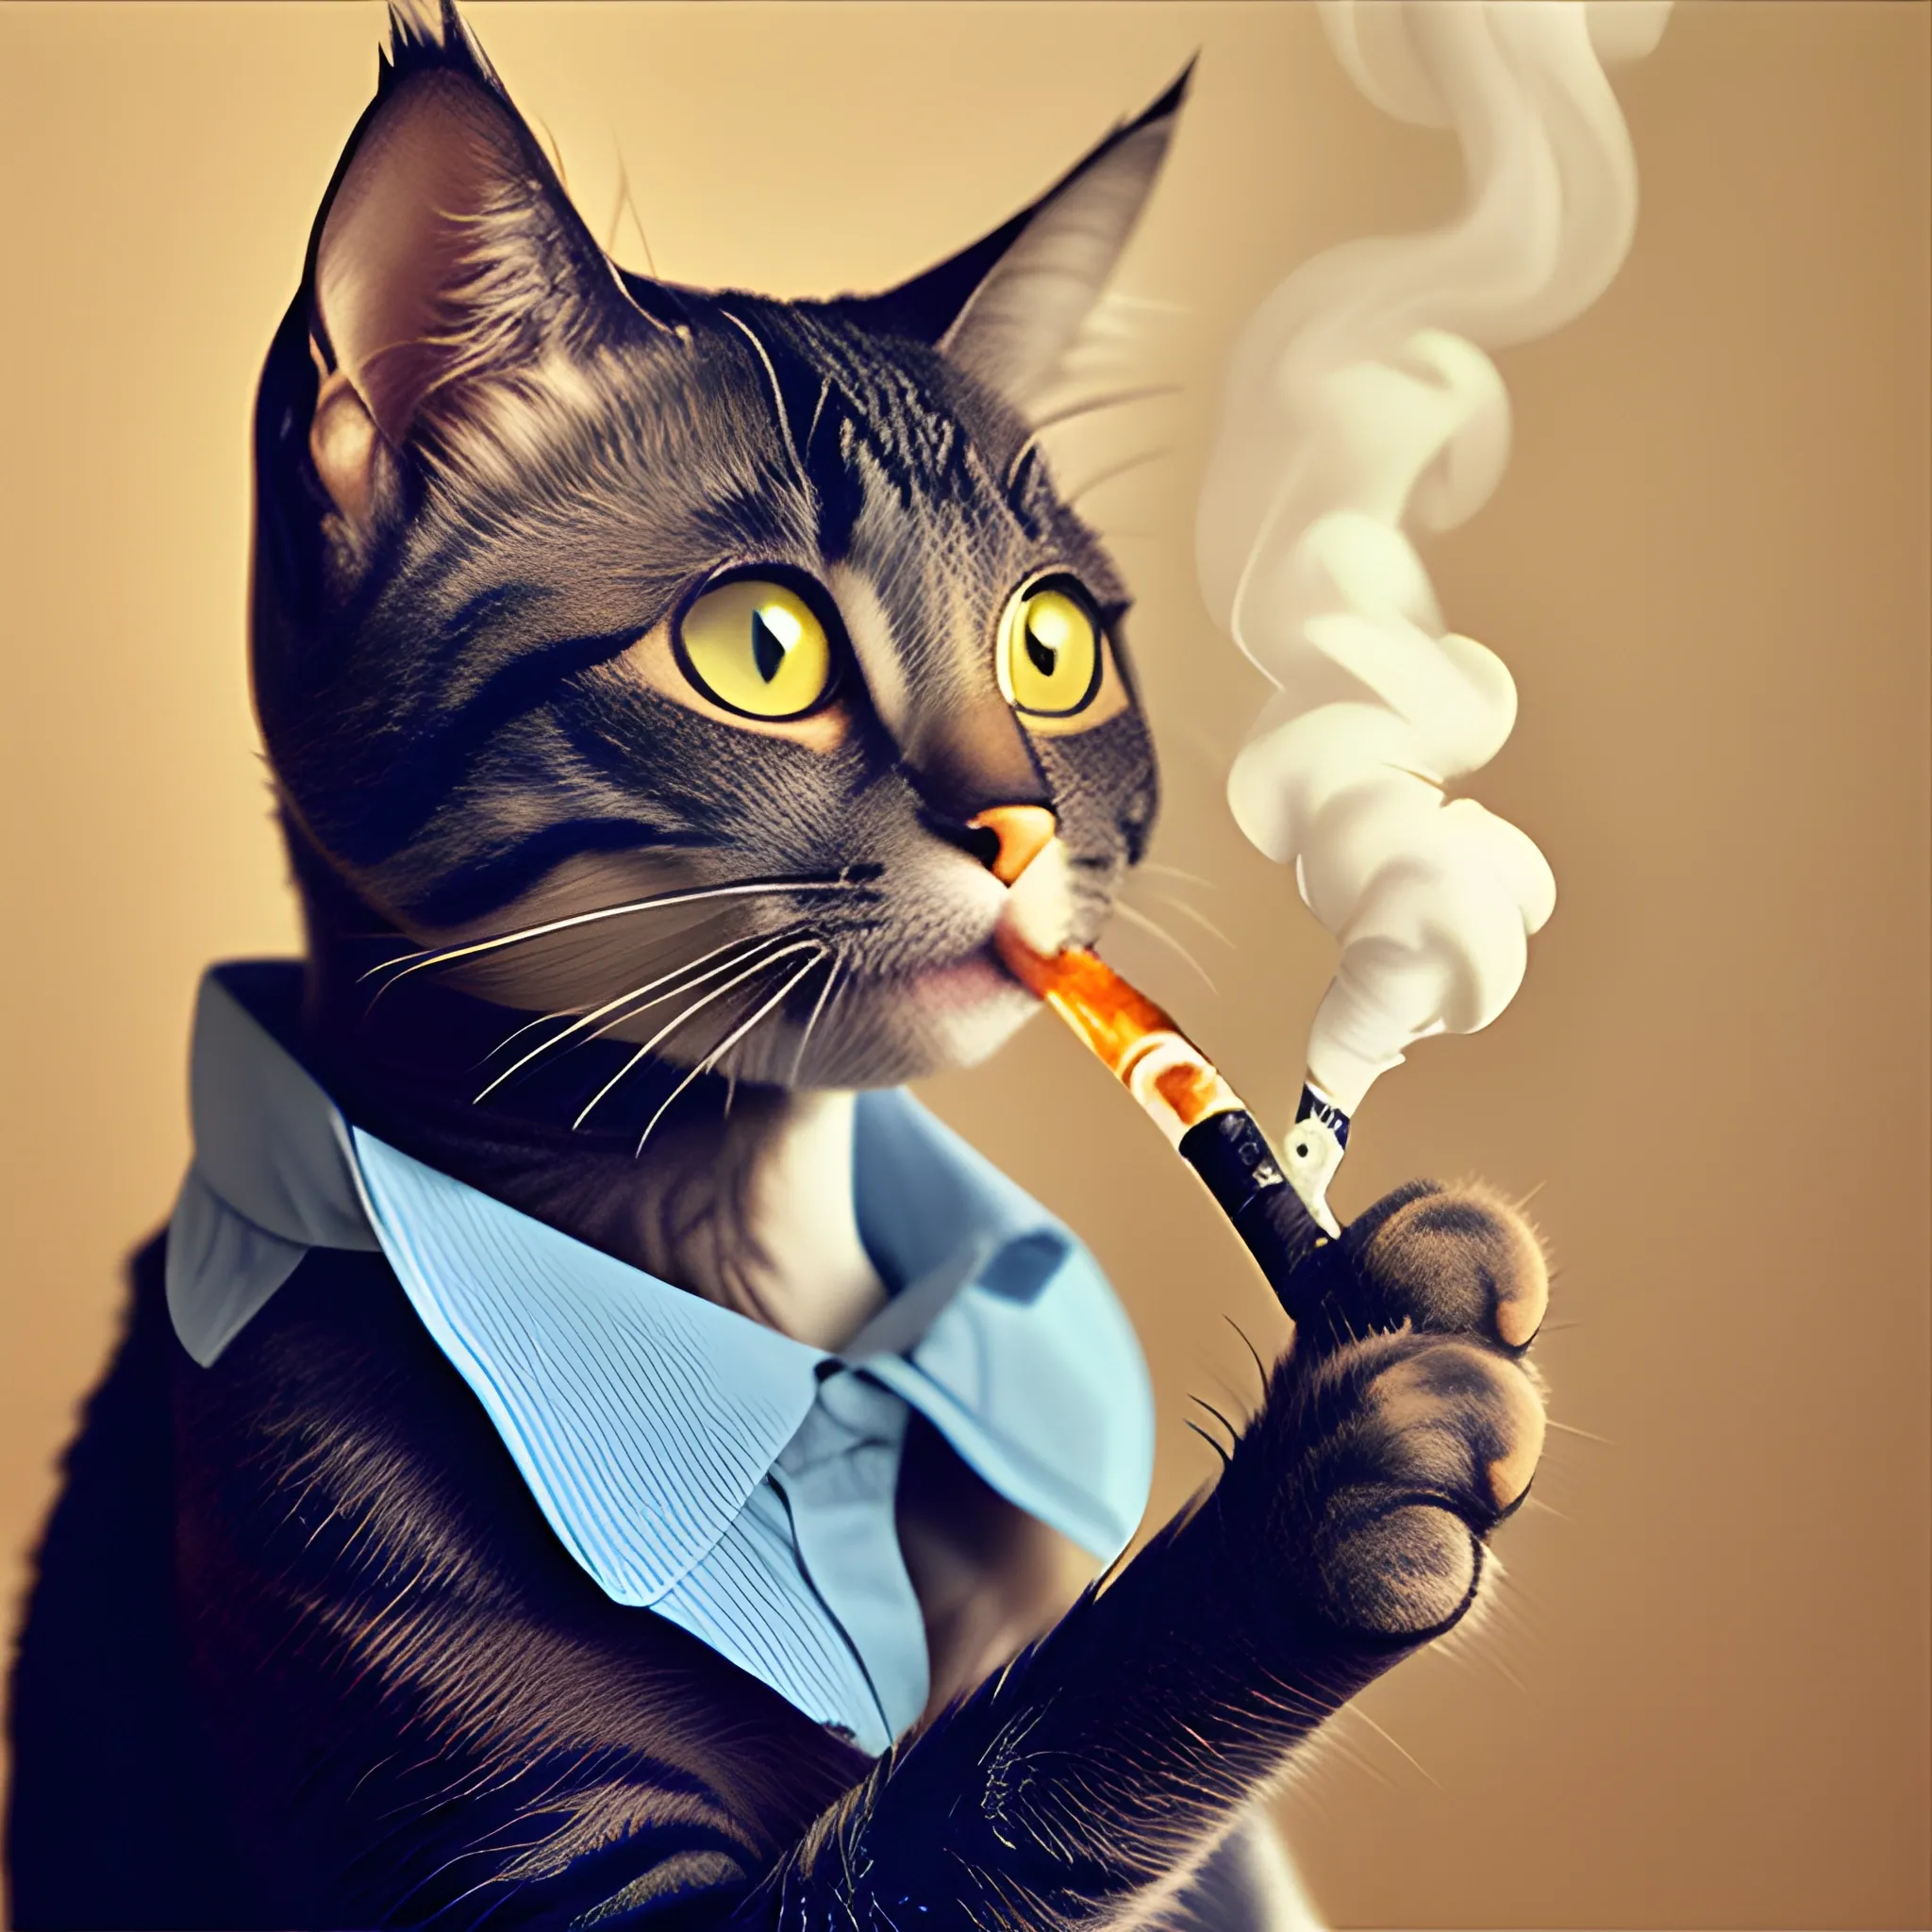 Cat smoking
